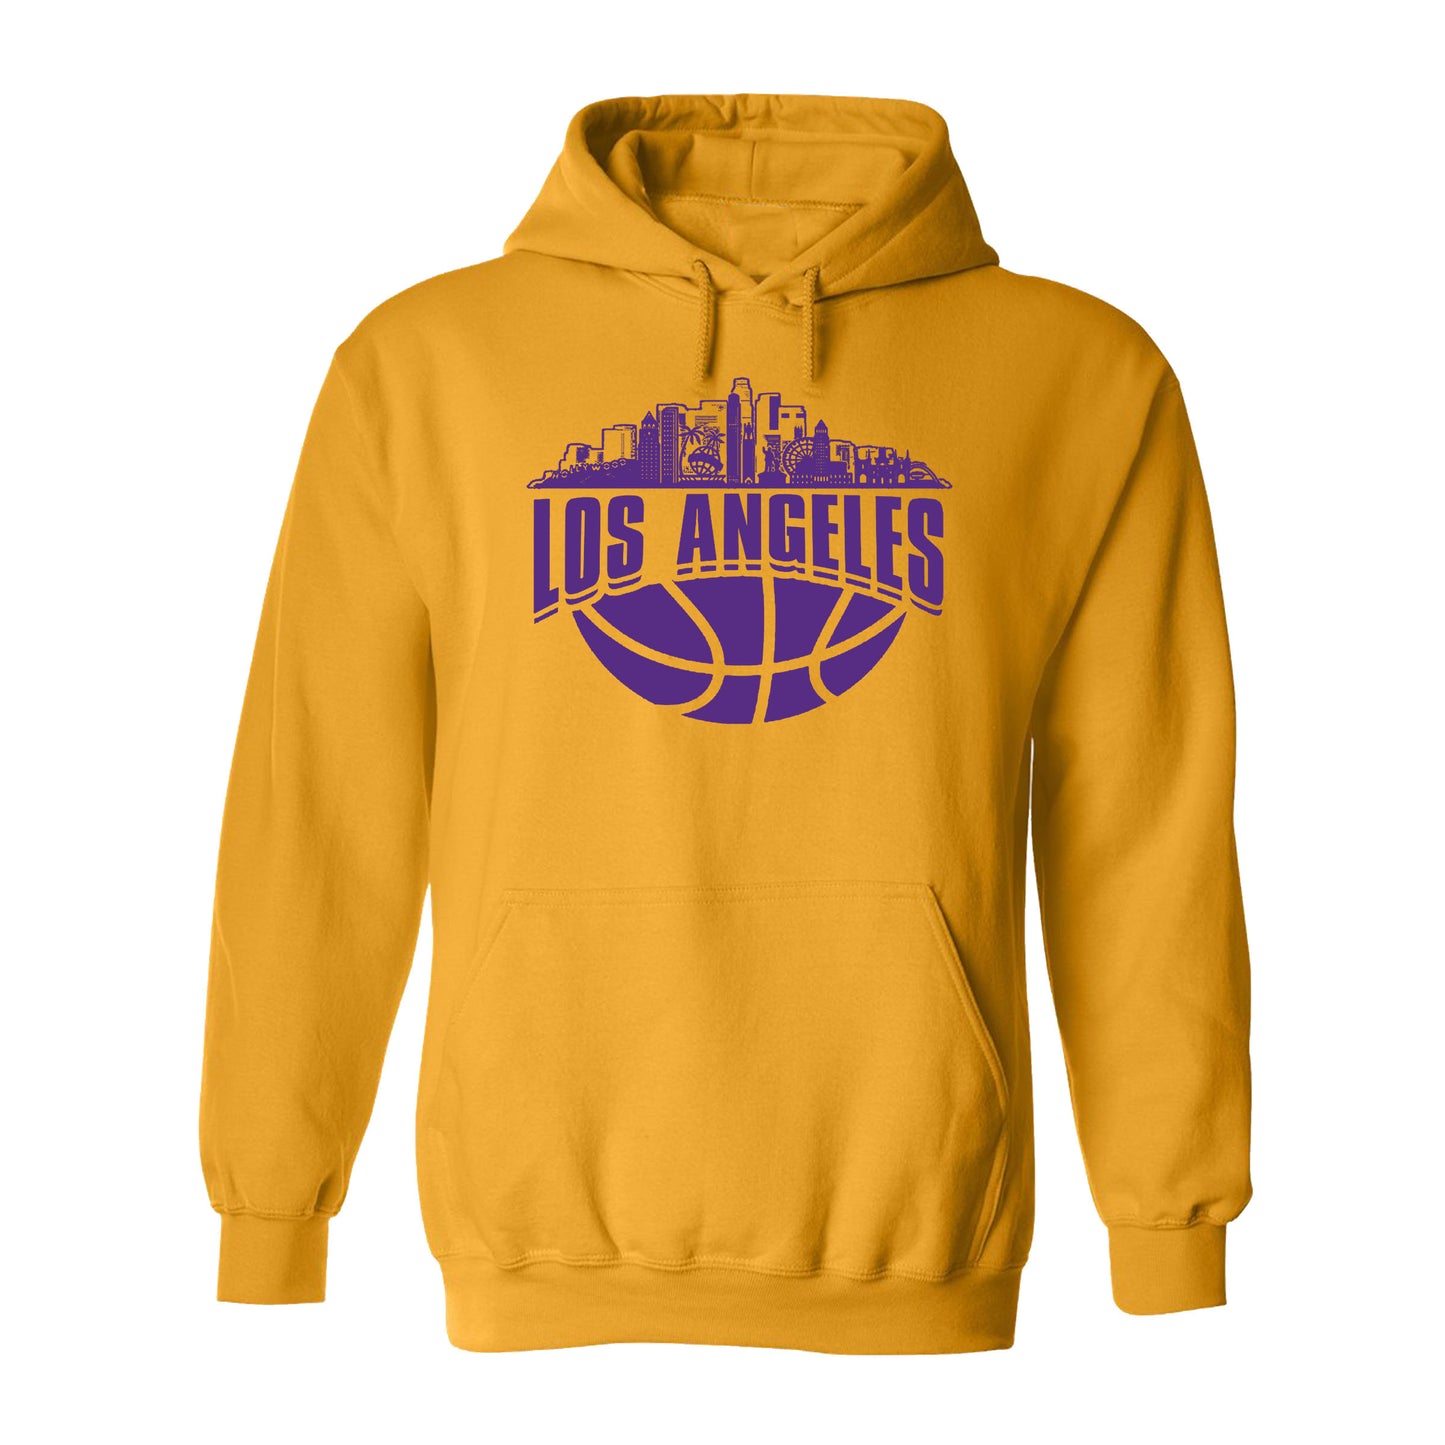 Los Angeles Basketball Jersey Cityscape Skyline Men's Shirt for Basketball Fans